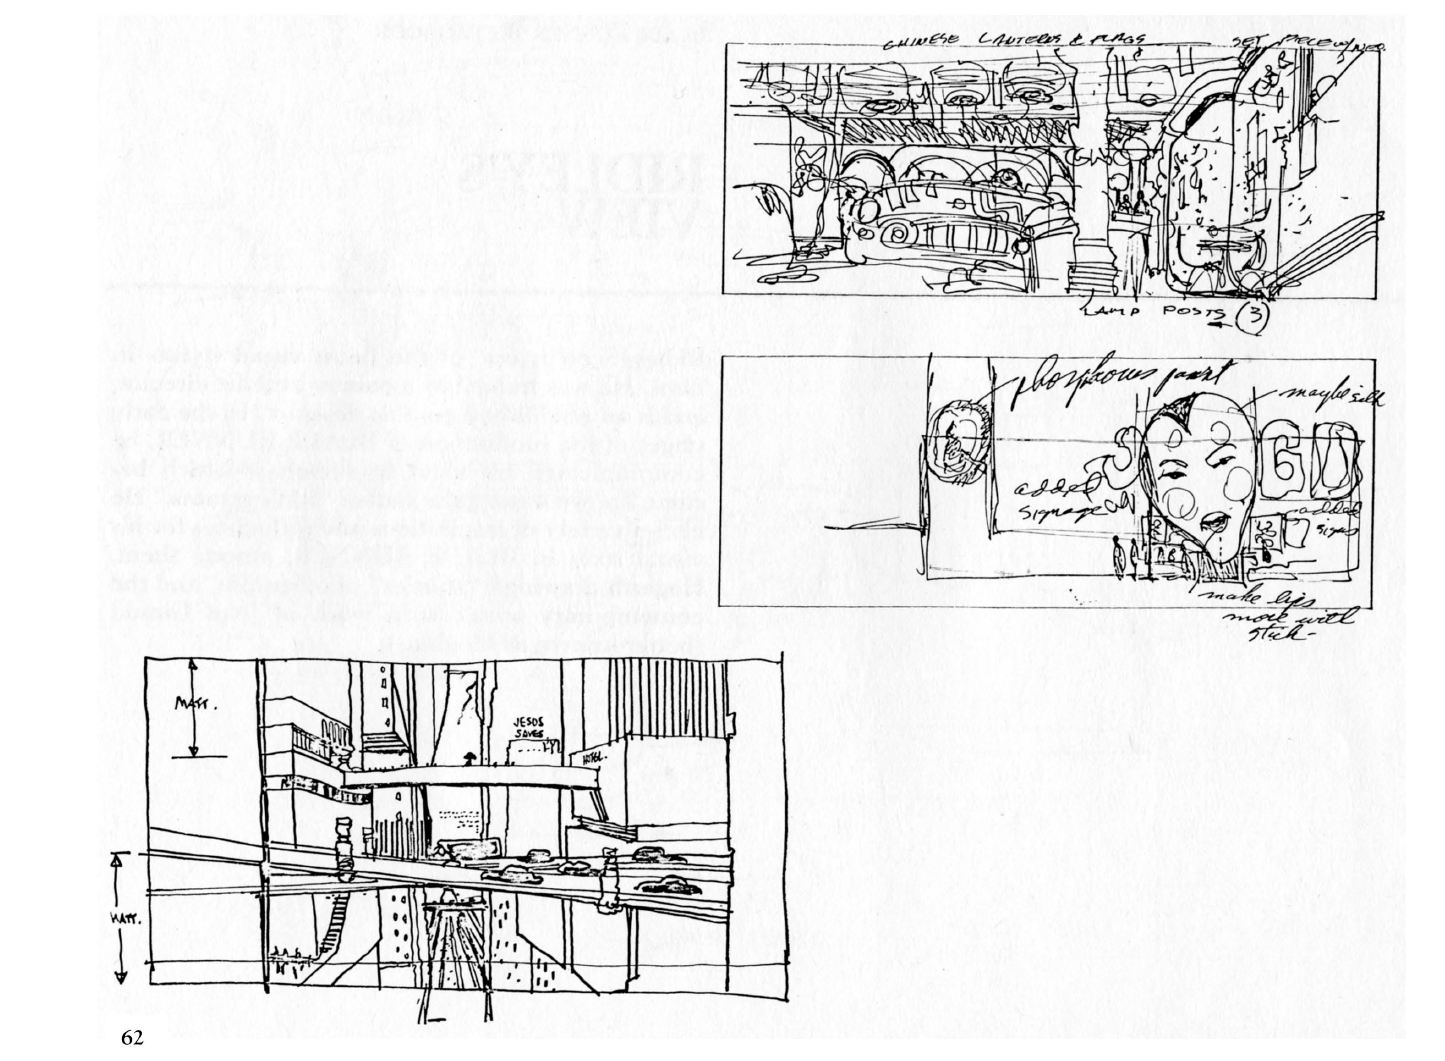 “Blade Runner sketchbook”, Blue Dolphin Enterprises, 1982